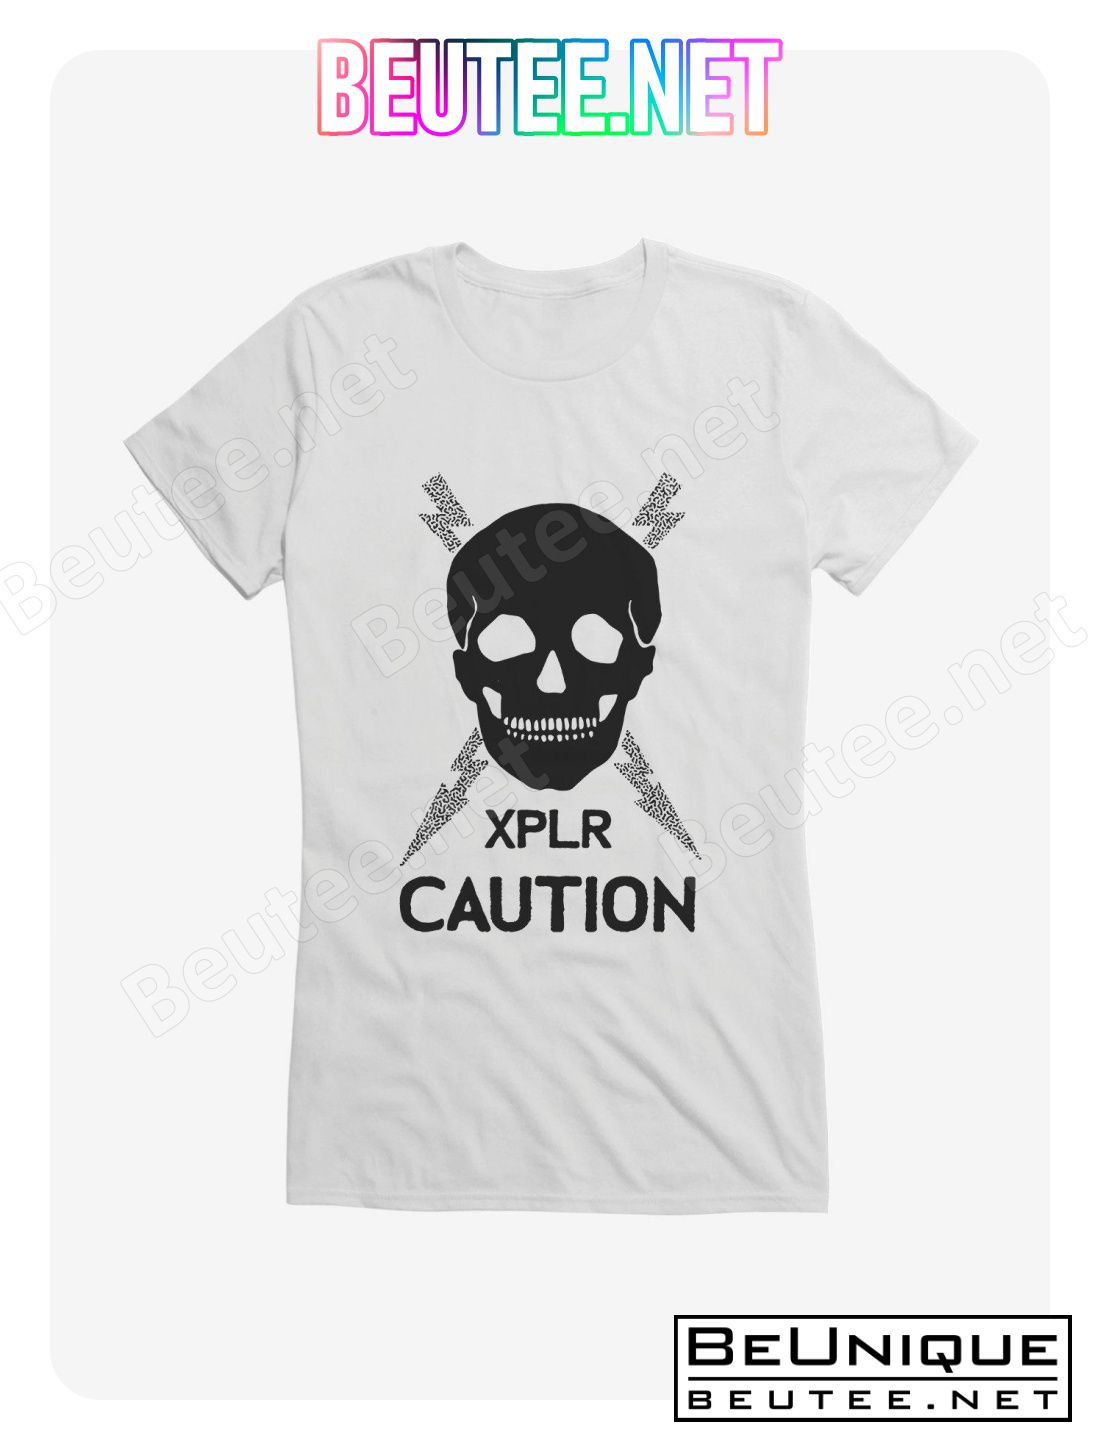 HT Creators Sam and Colby XPLR Caution T-Shirt